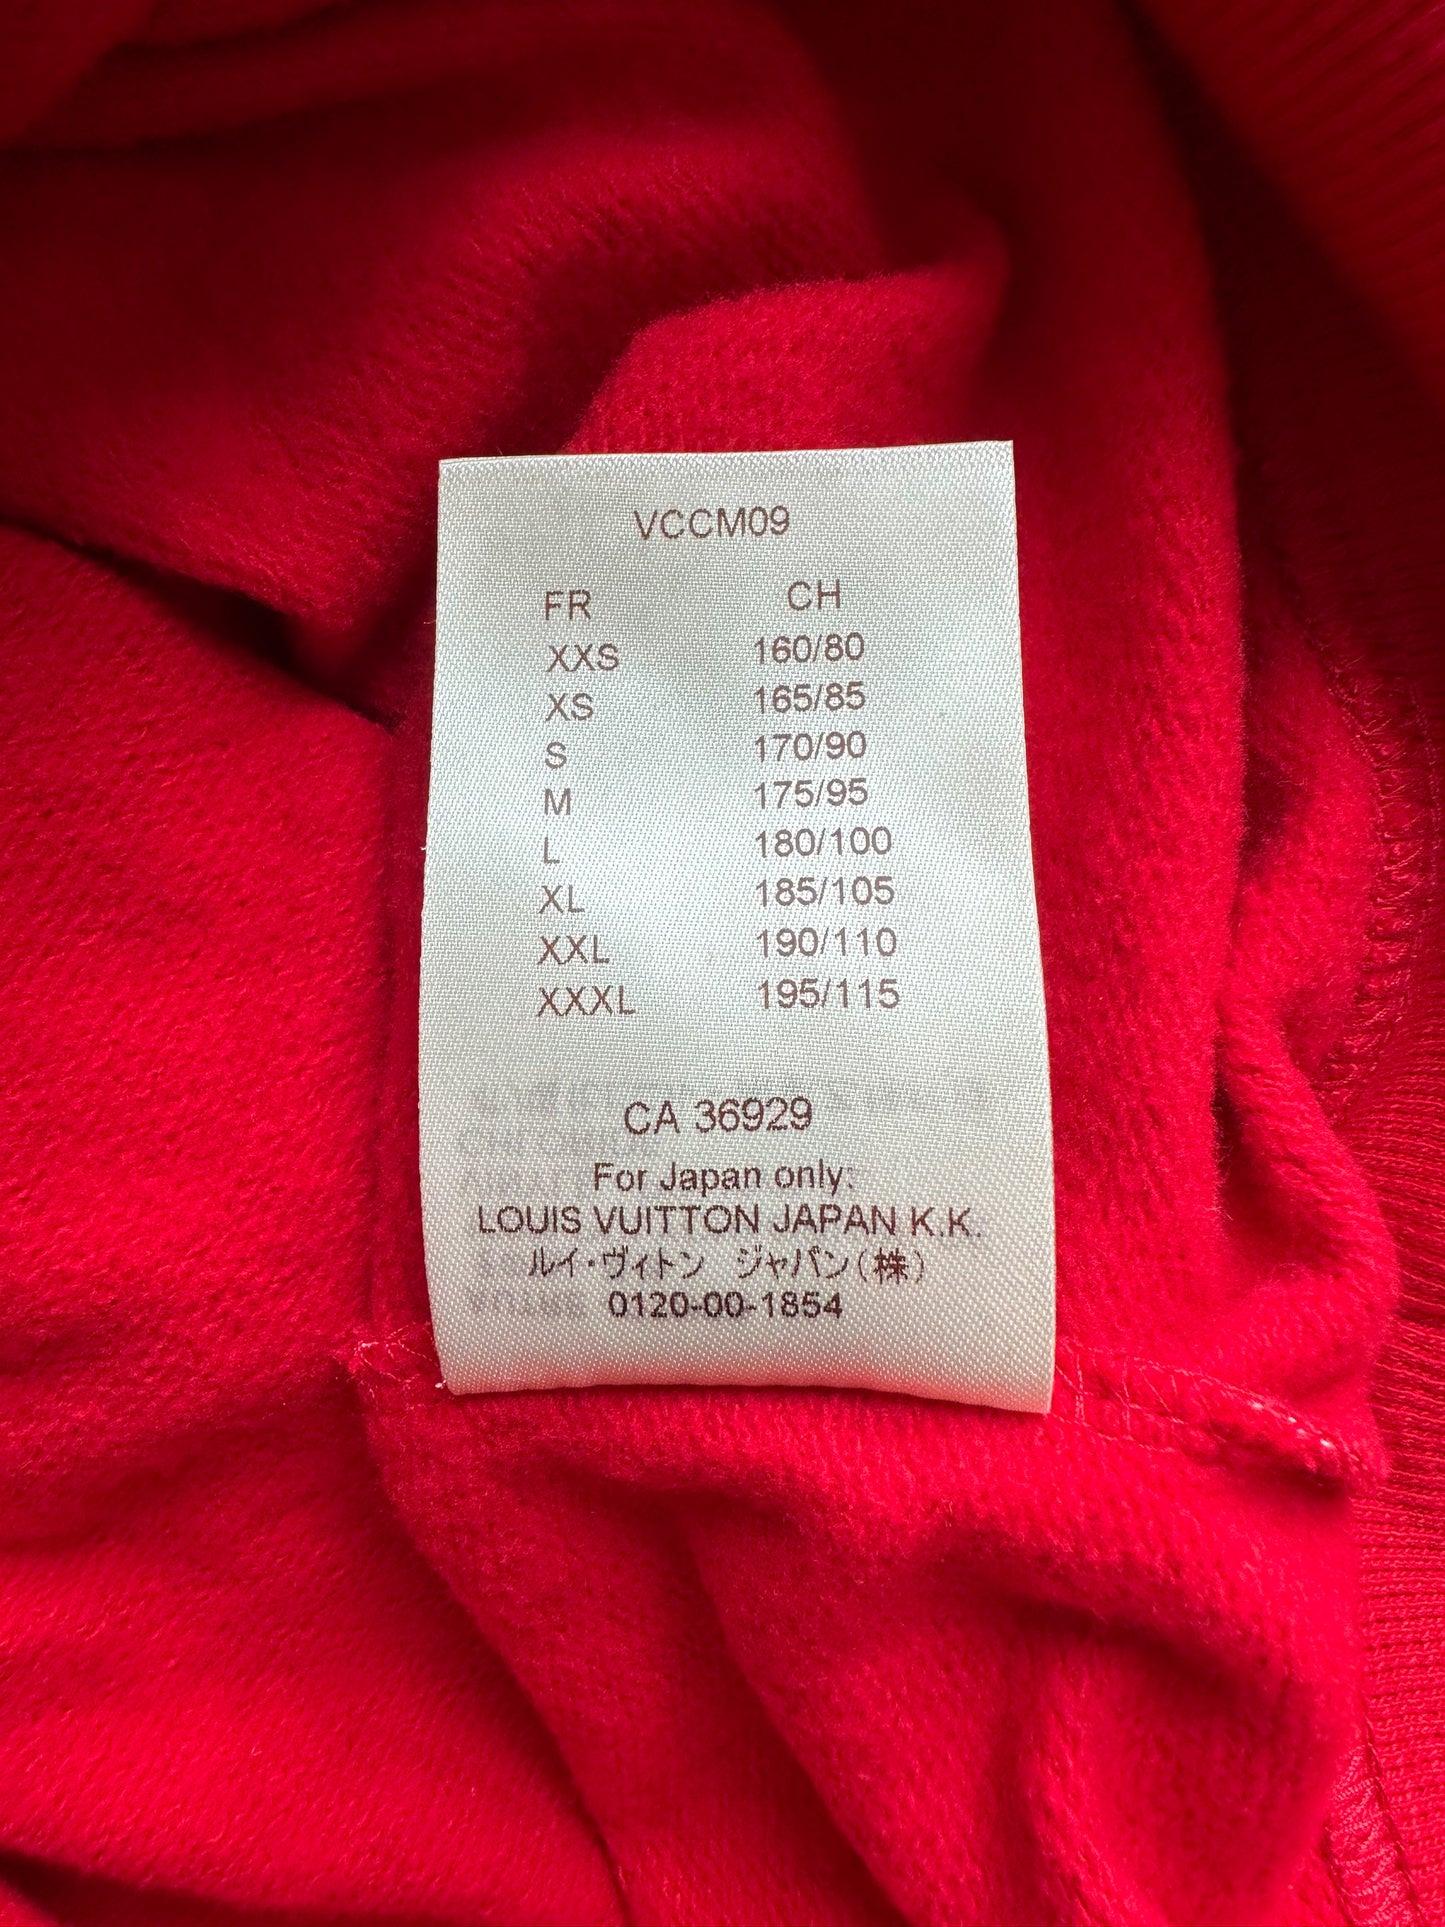 Supreme Louis Vuitton Circle Logo Red Pullover Hooded Sweatshirt - Tagotee